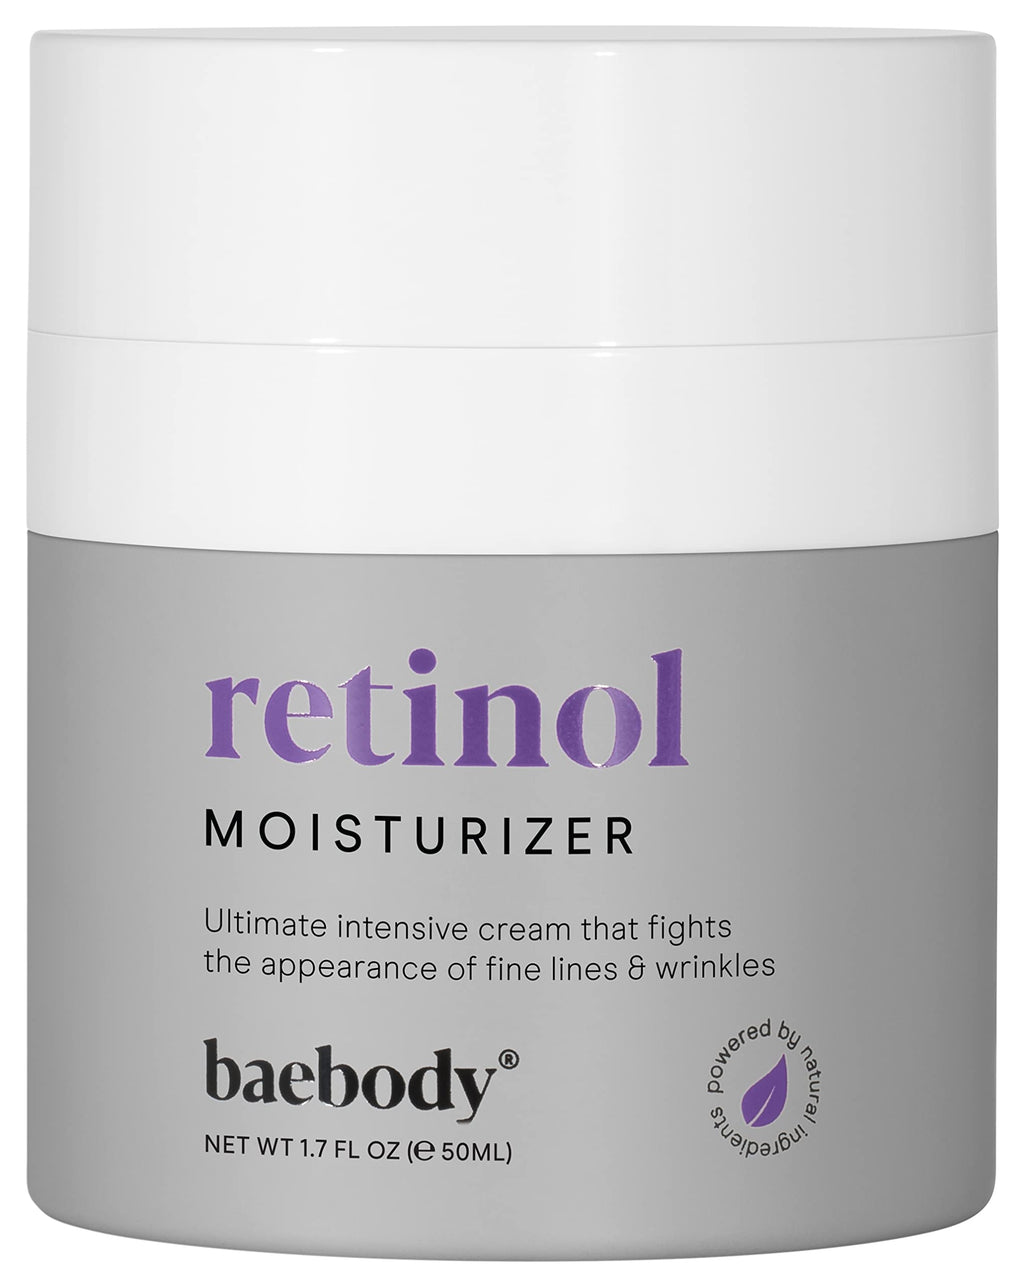 [Australia] - Baebody Retinol Moisturiser Cream for Face, Neck and D√©colletage with Wrinkle and Acne Fighting Retinol, Jojoba Oil and Vitamin E, 1.7 Ounces 